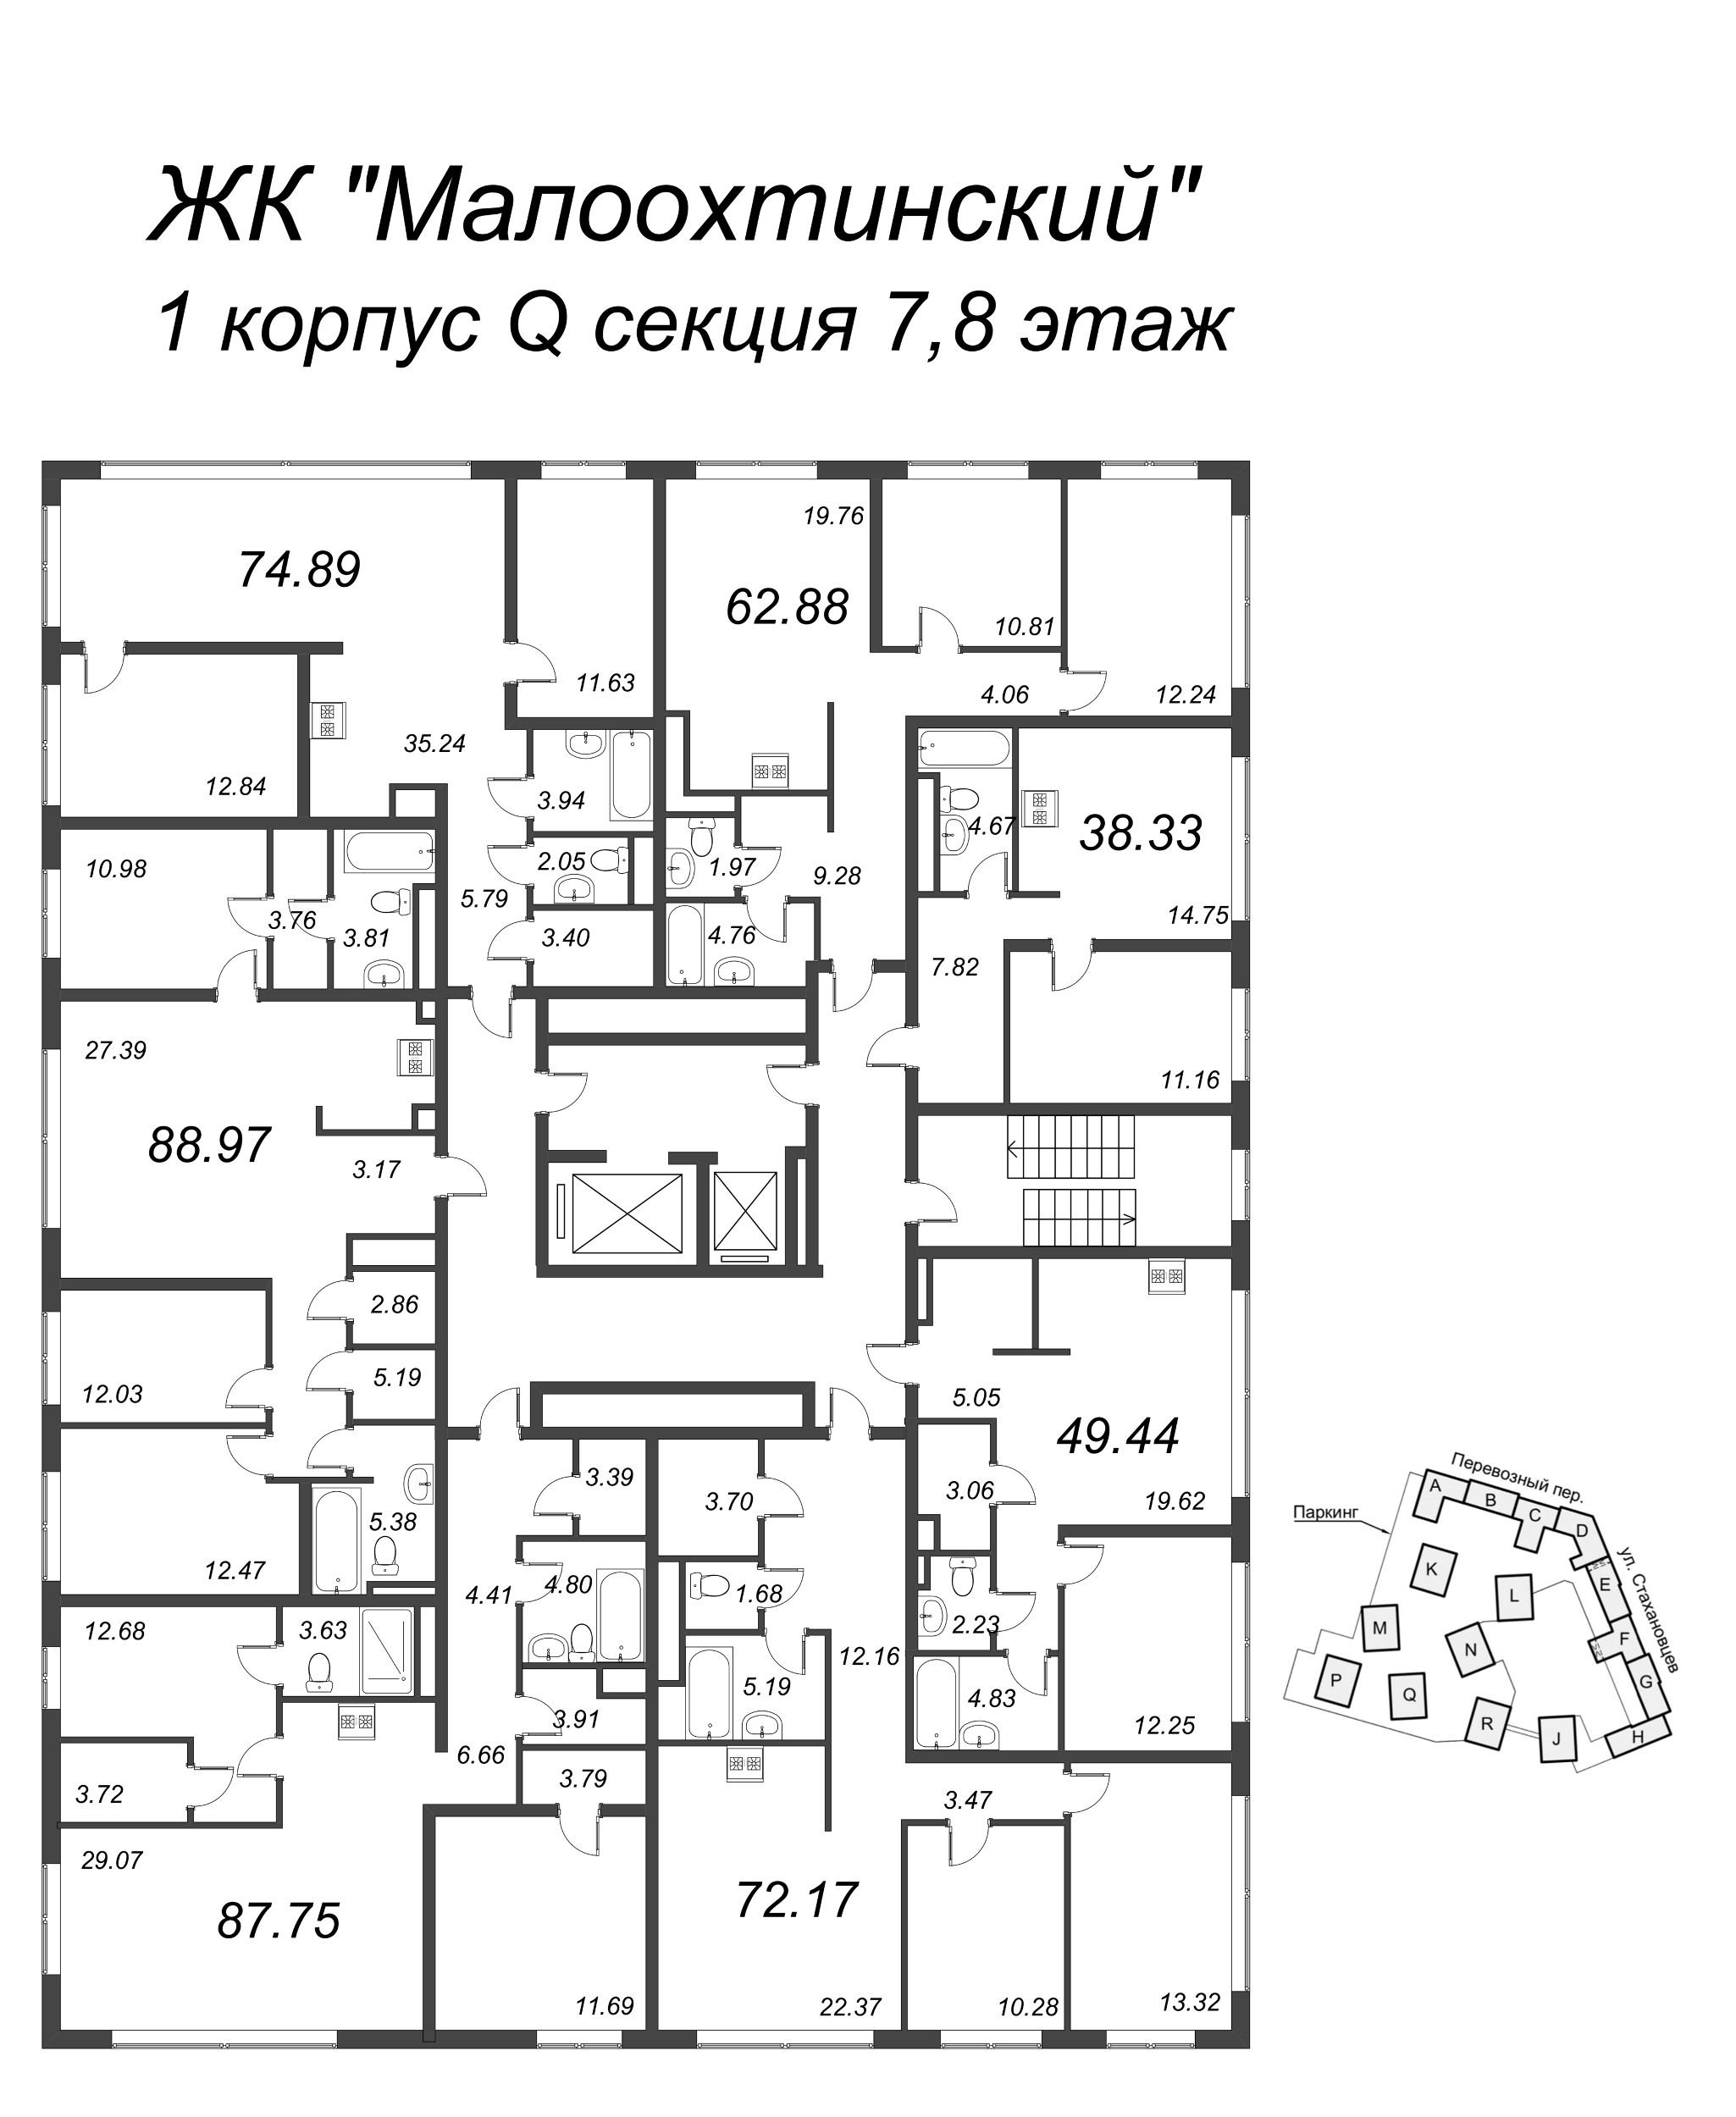 3-комнатная (Евро) квартира, 65.6 м² - планировка этажа